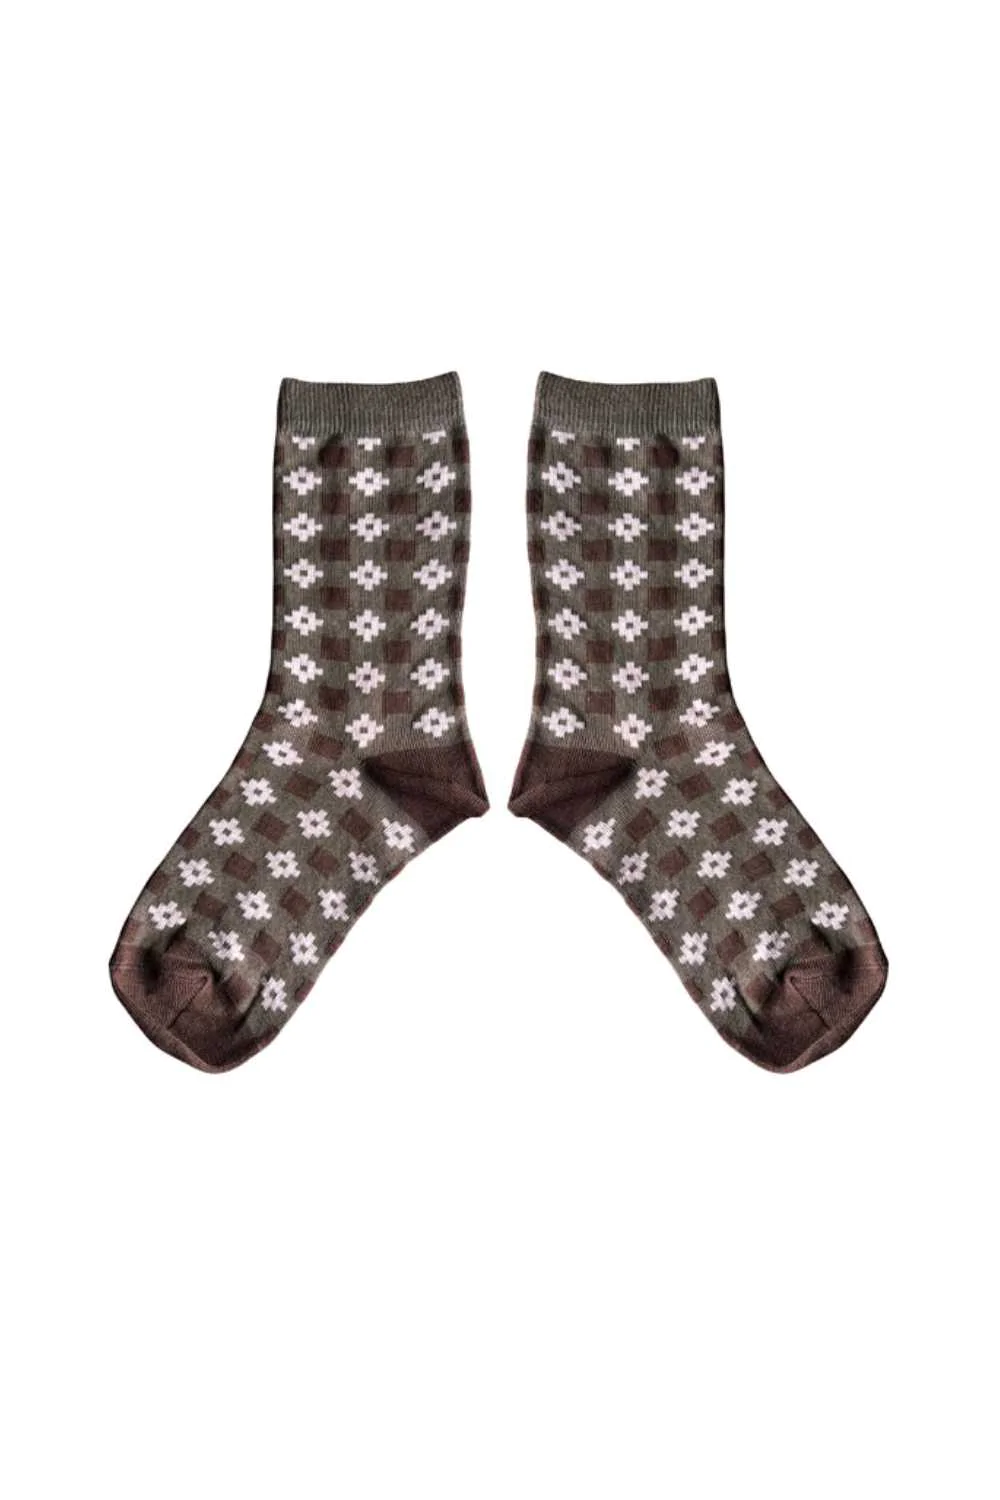 Mabli Castell Short Socks - Khaki - M Last Pair